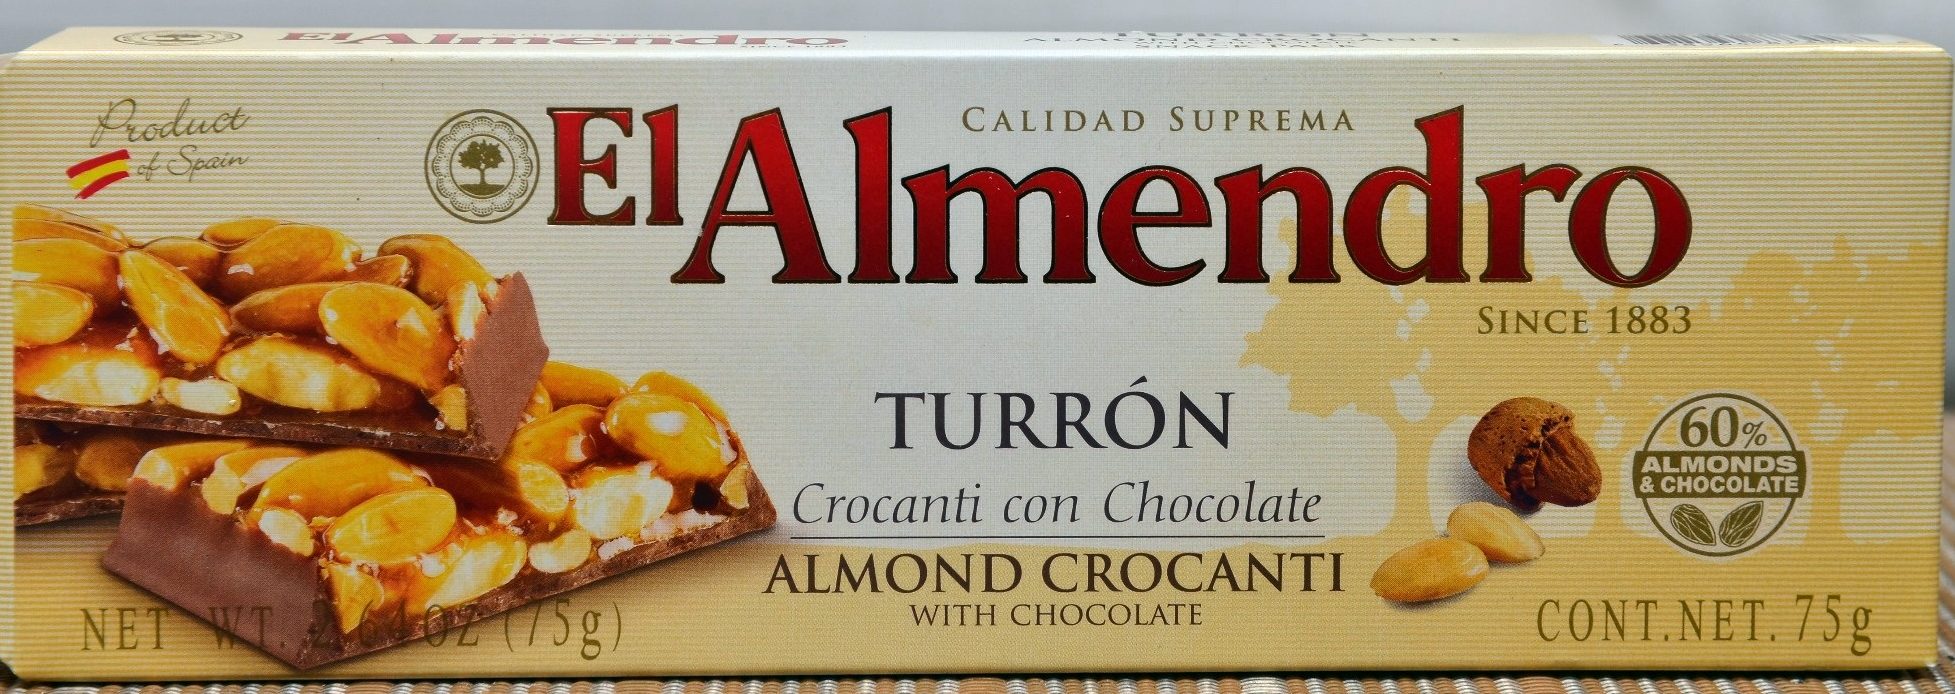 Turron Crocanti con Chocolate - Produit